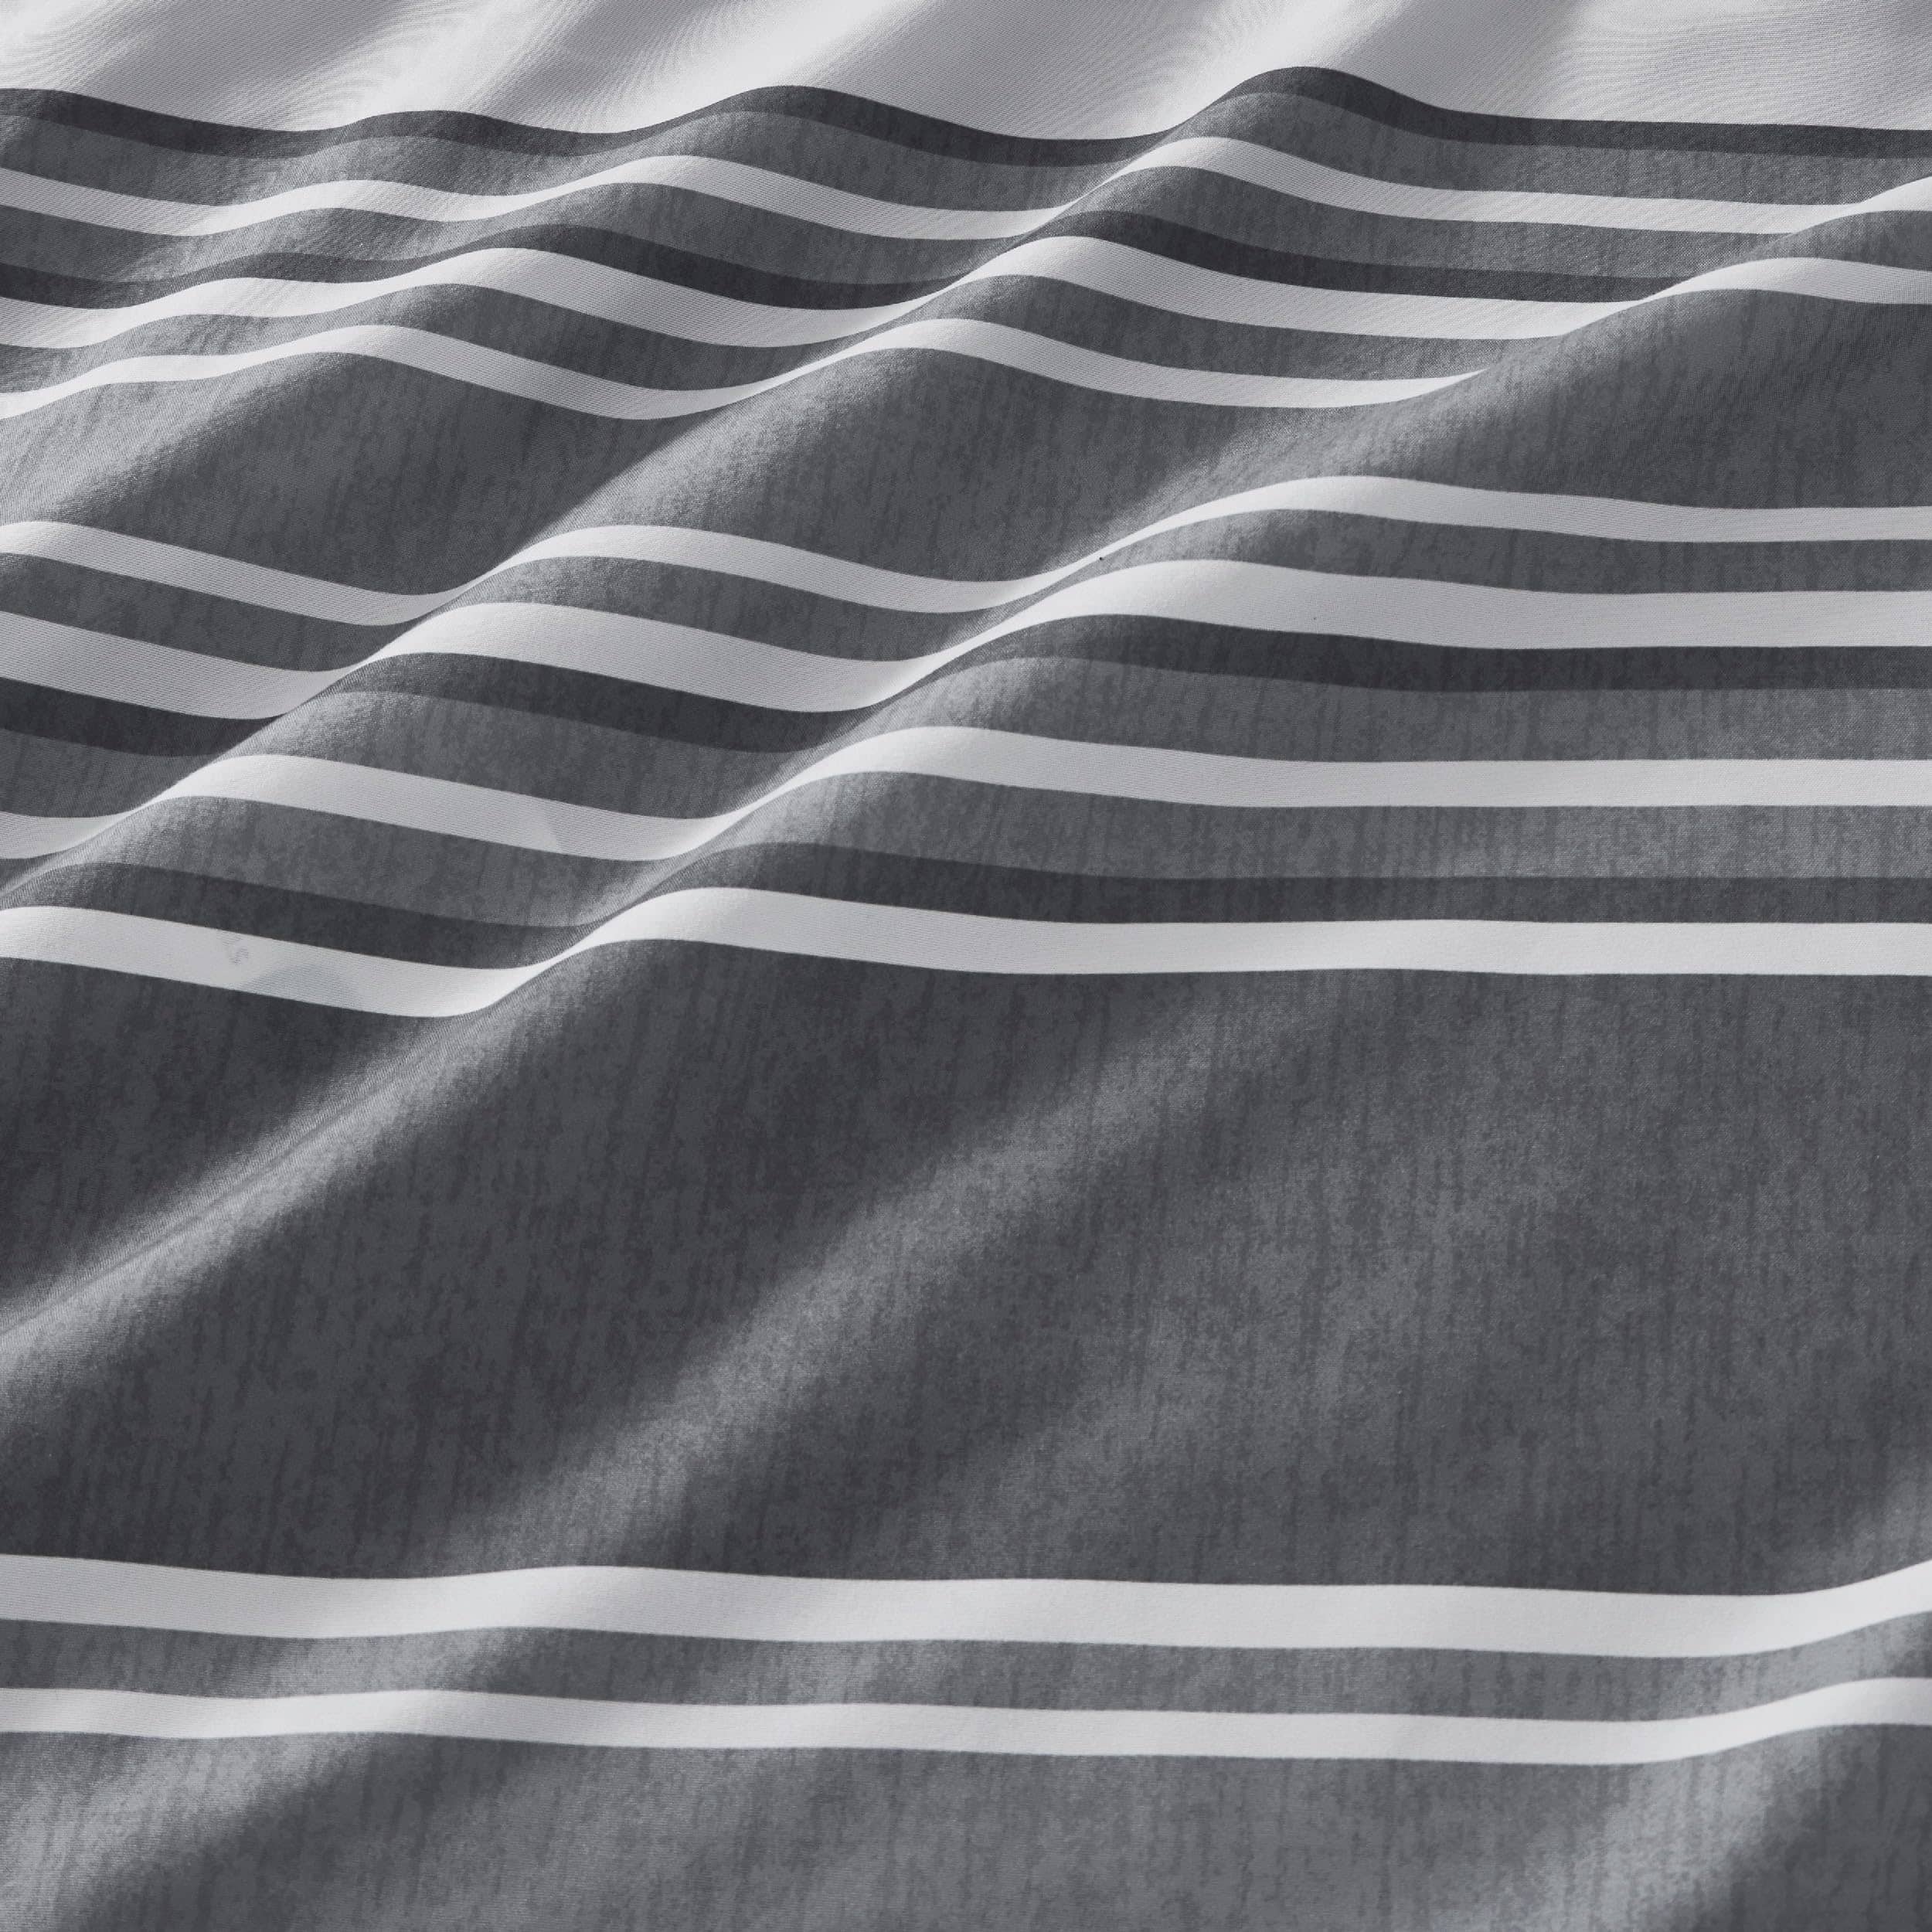 Stripe-Patterned Bed-in-a-Bag-1